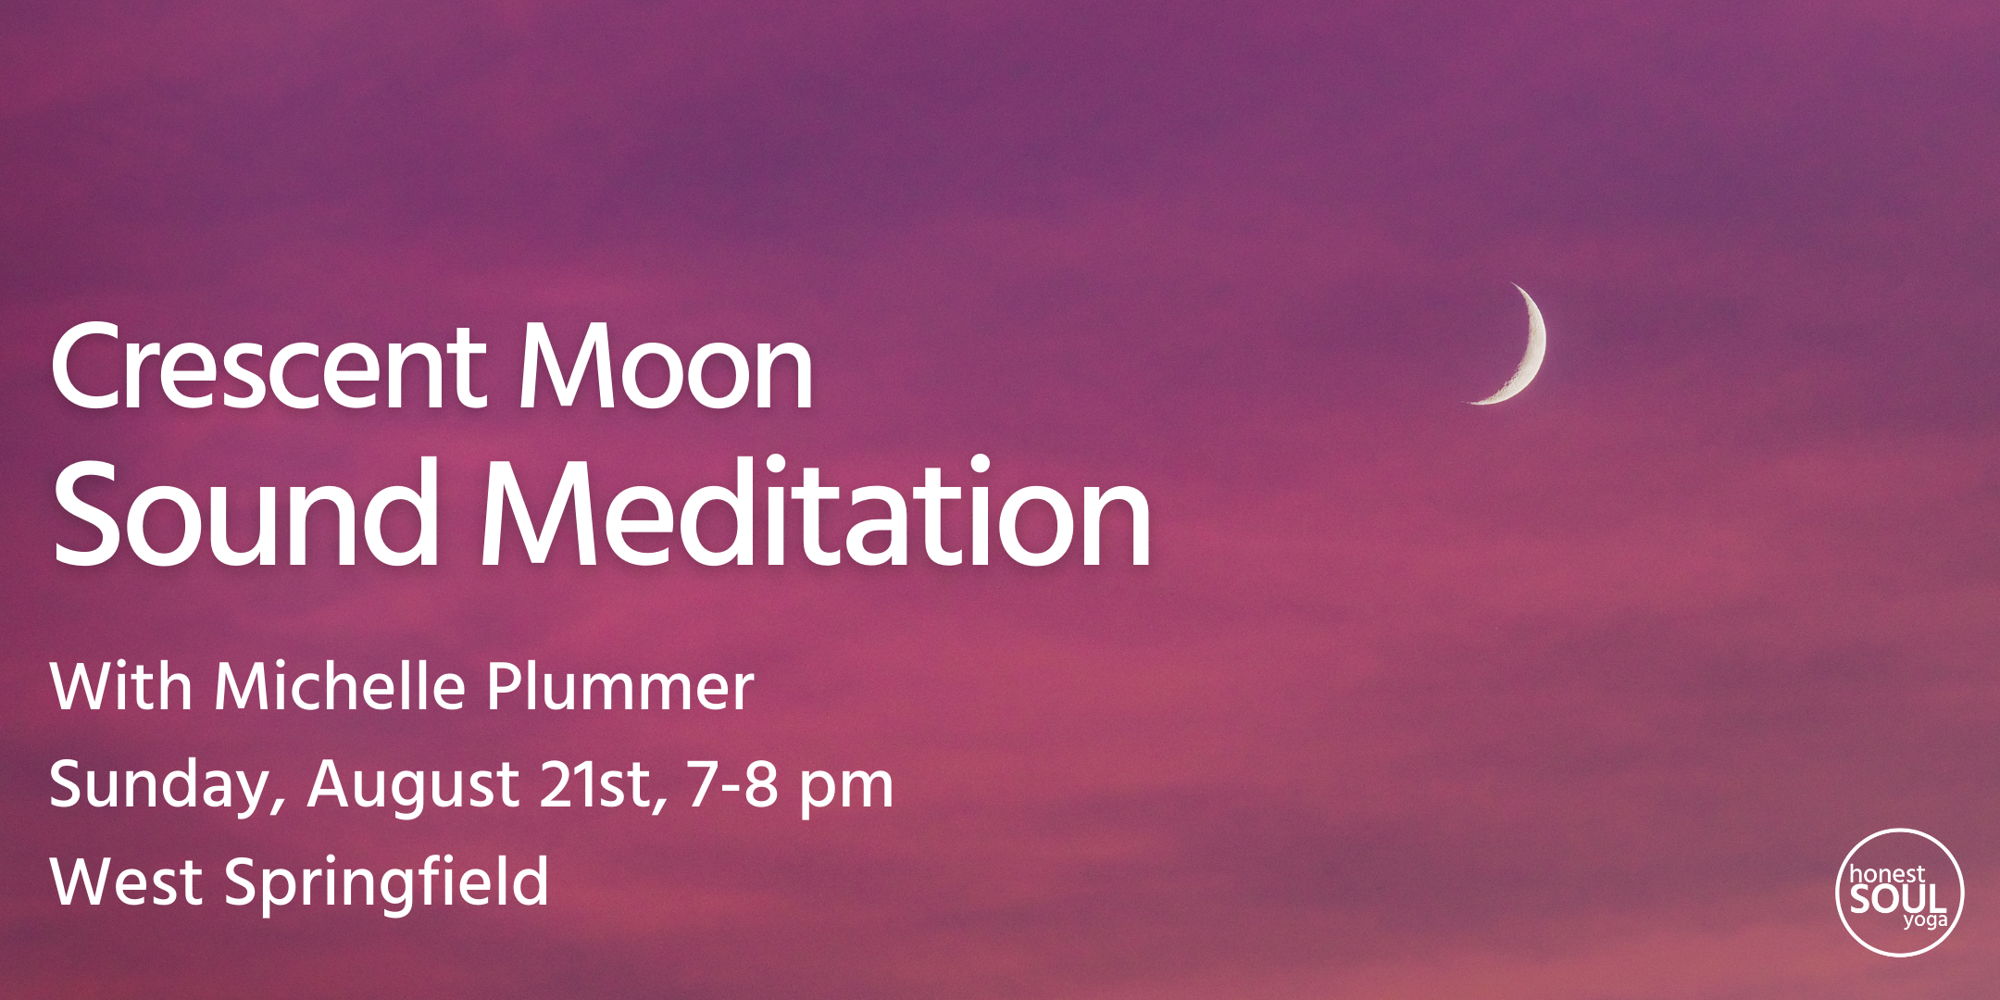 Crescent Moon Sound Meditation promotional image